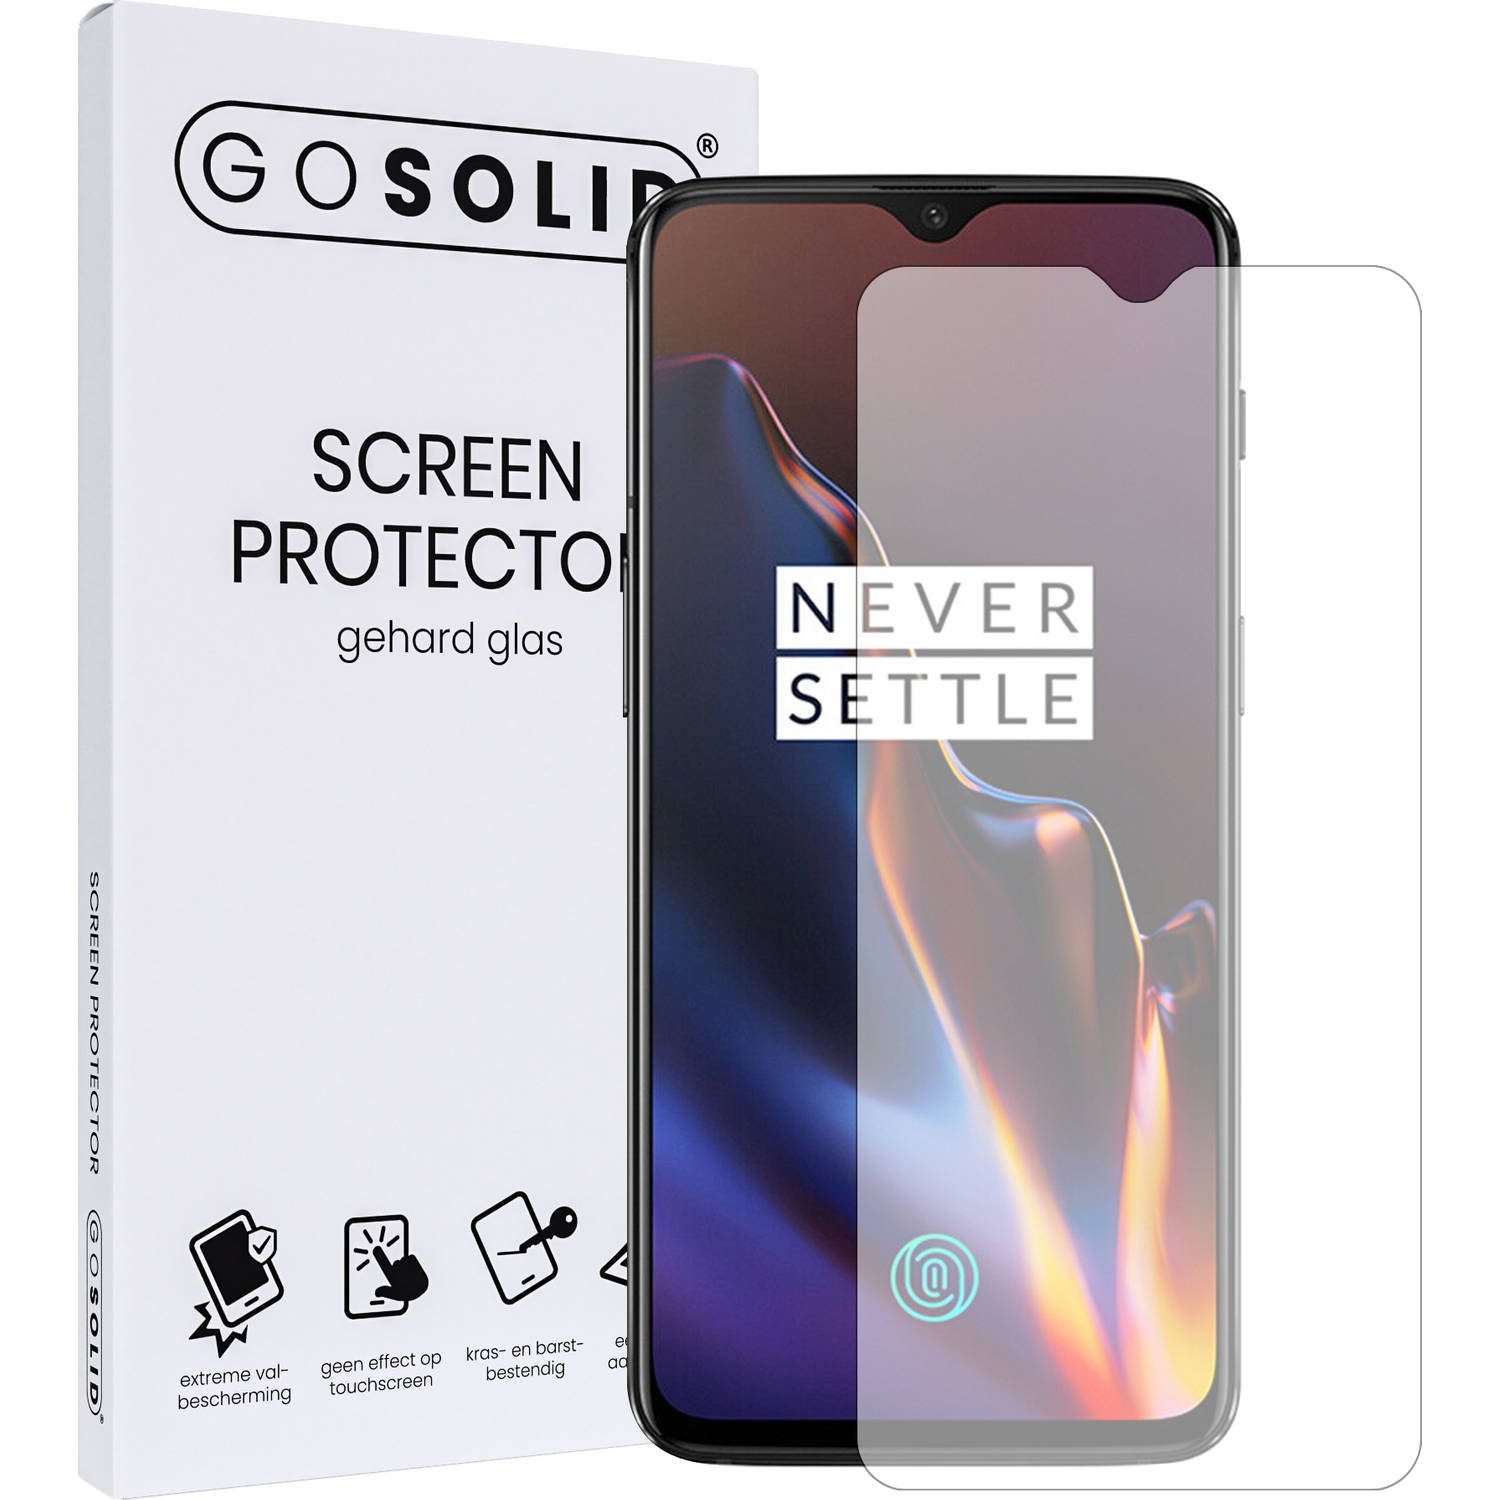 GO SOLID! ® Screenprotector Oneplus 6T - gehard glas